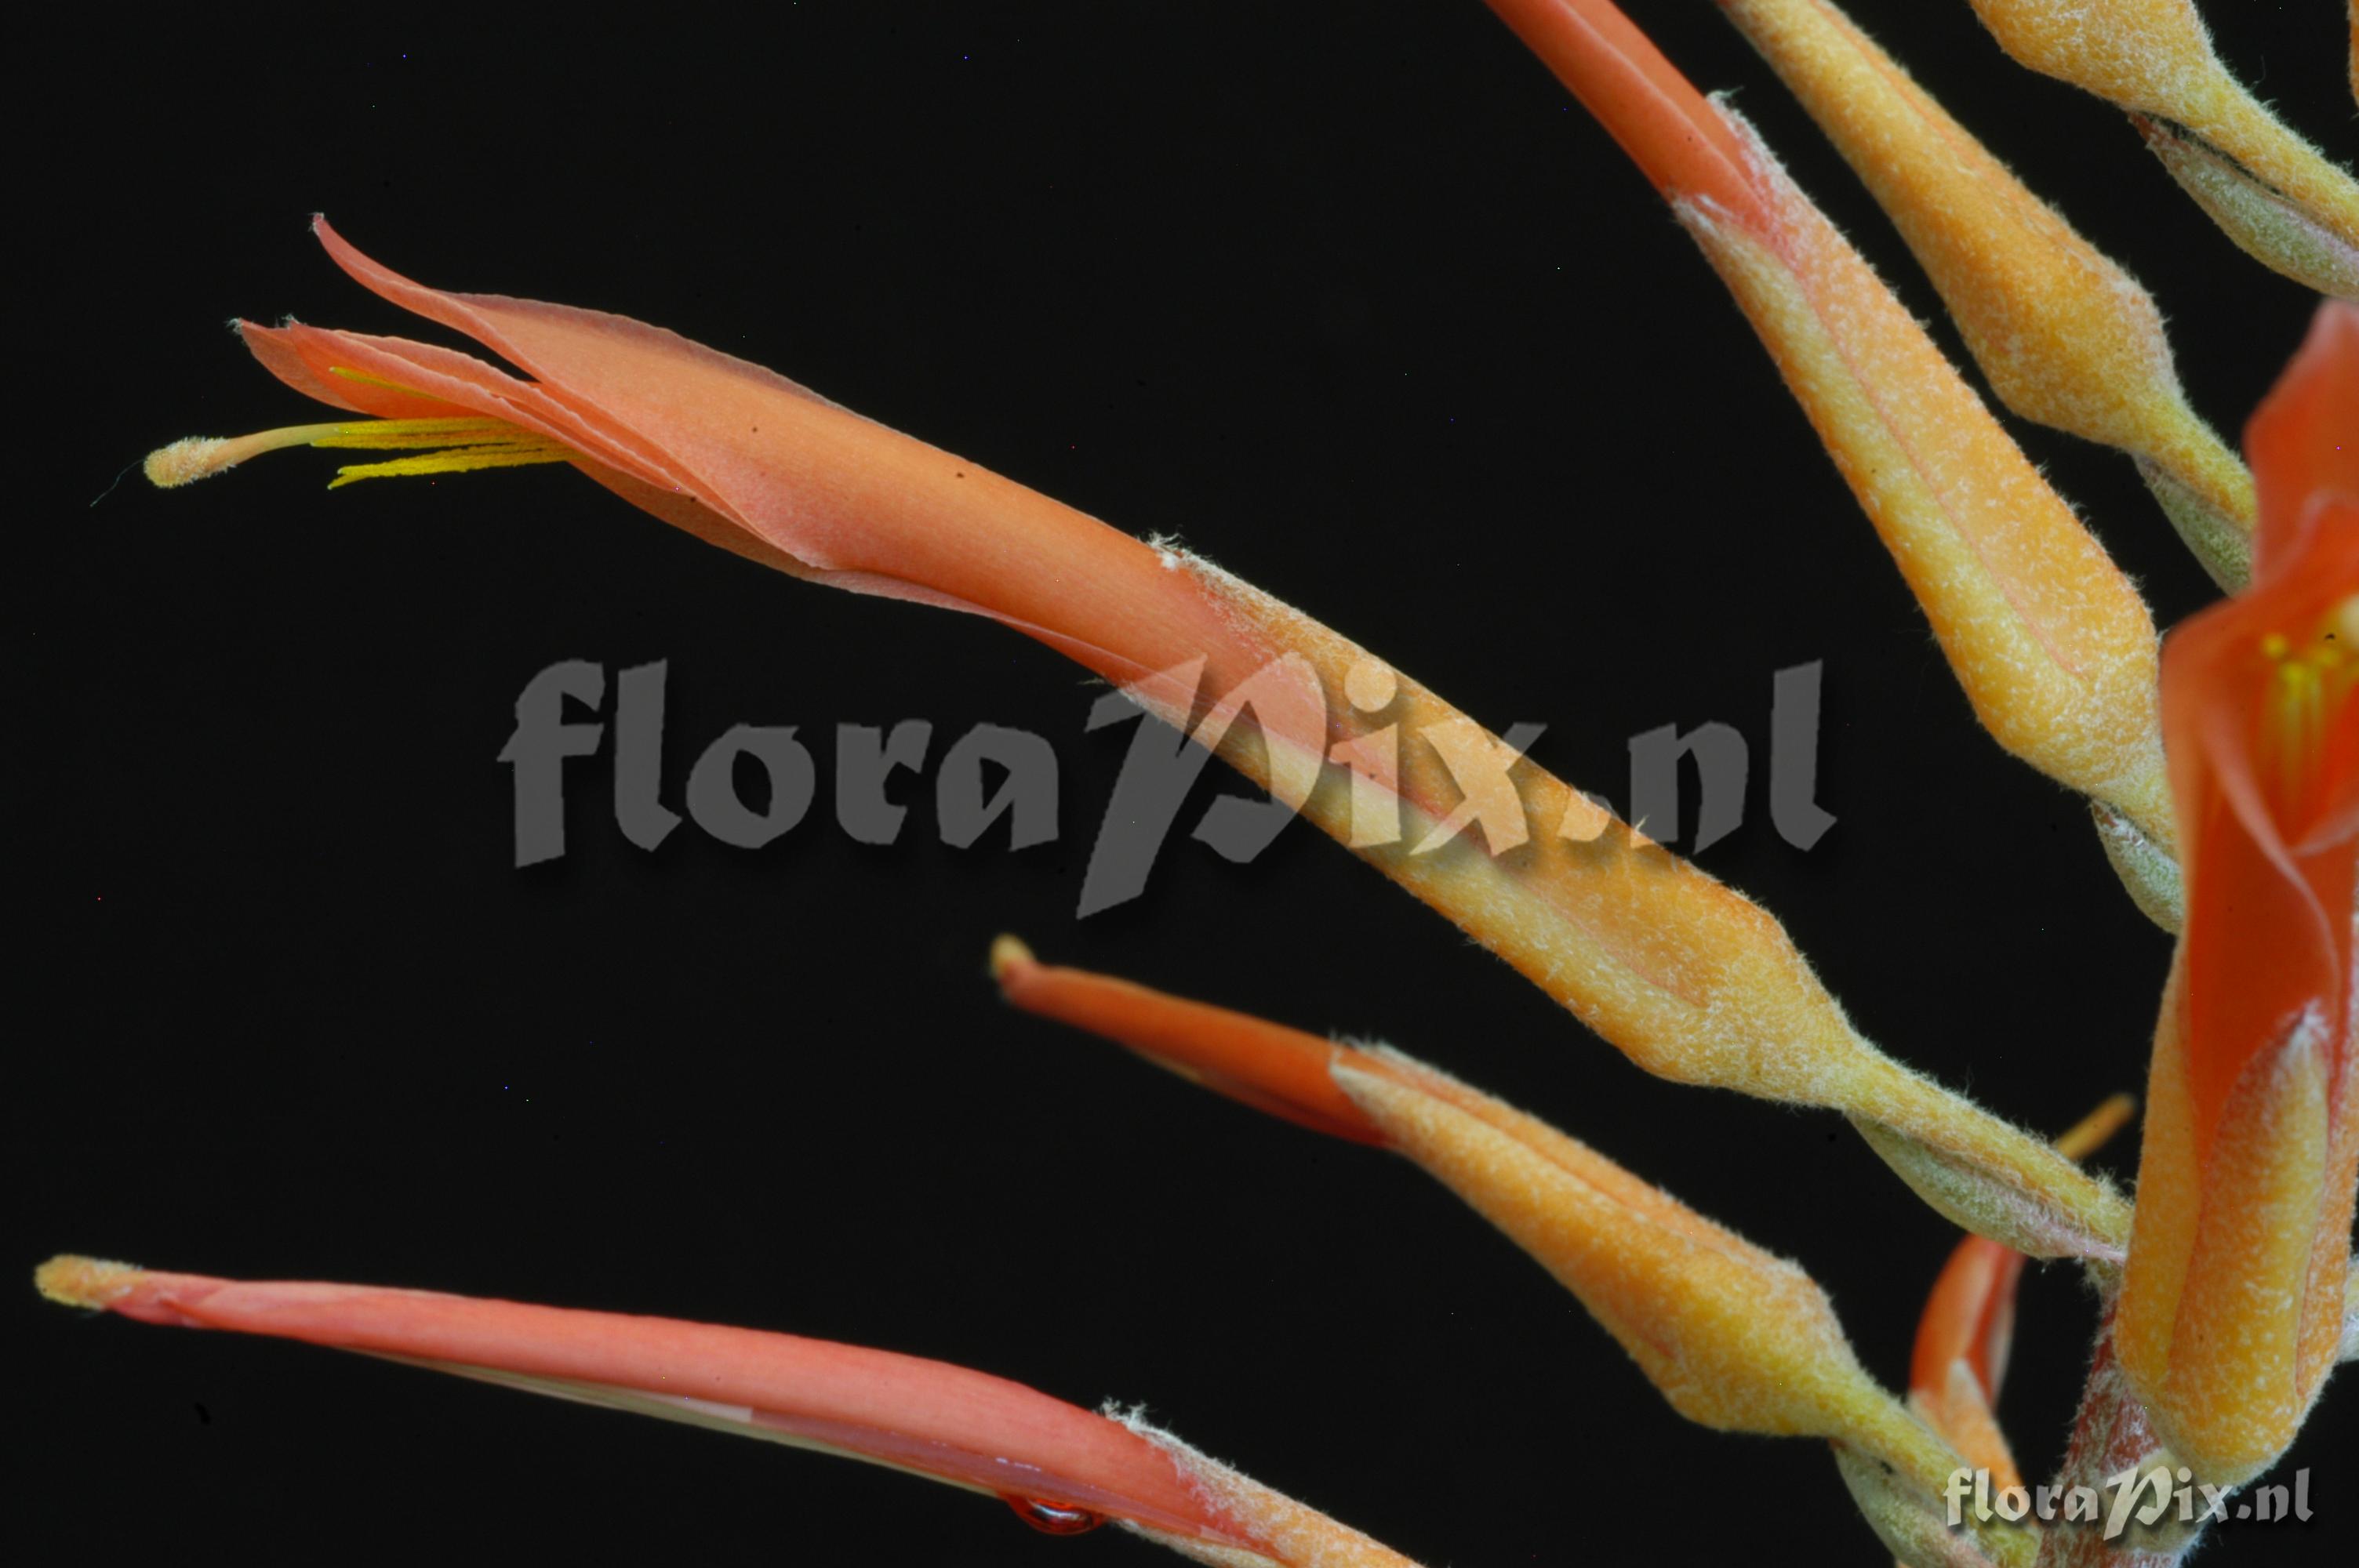 Pitcairnia aff. amblyosperma